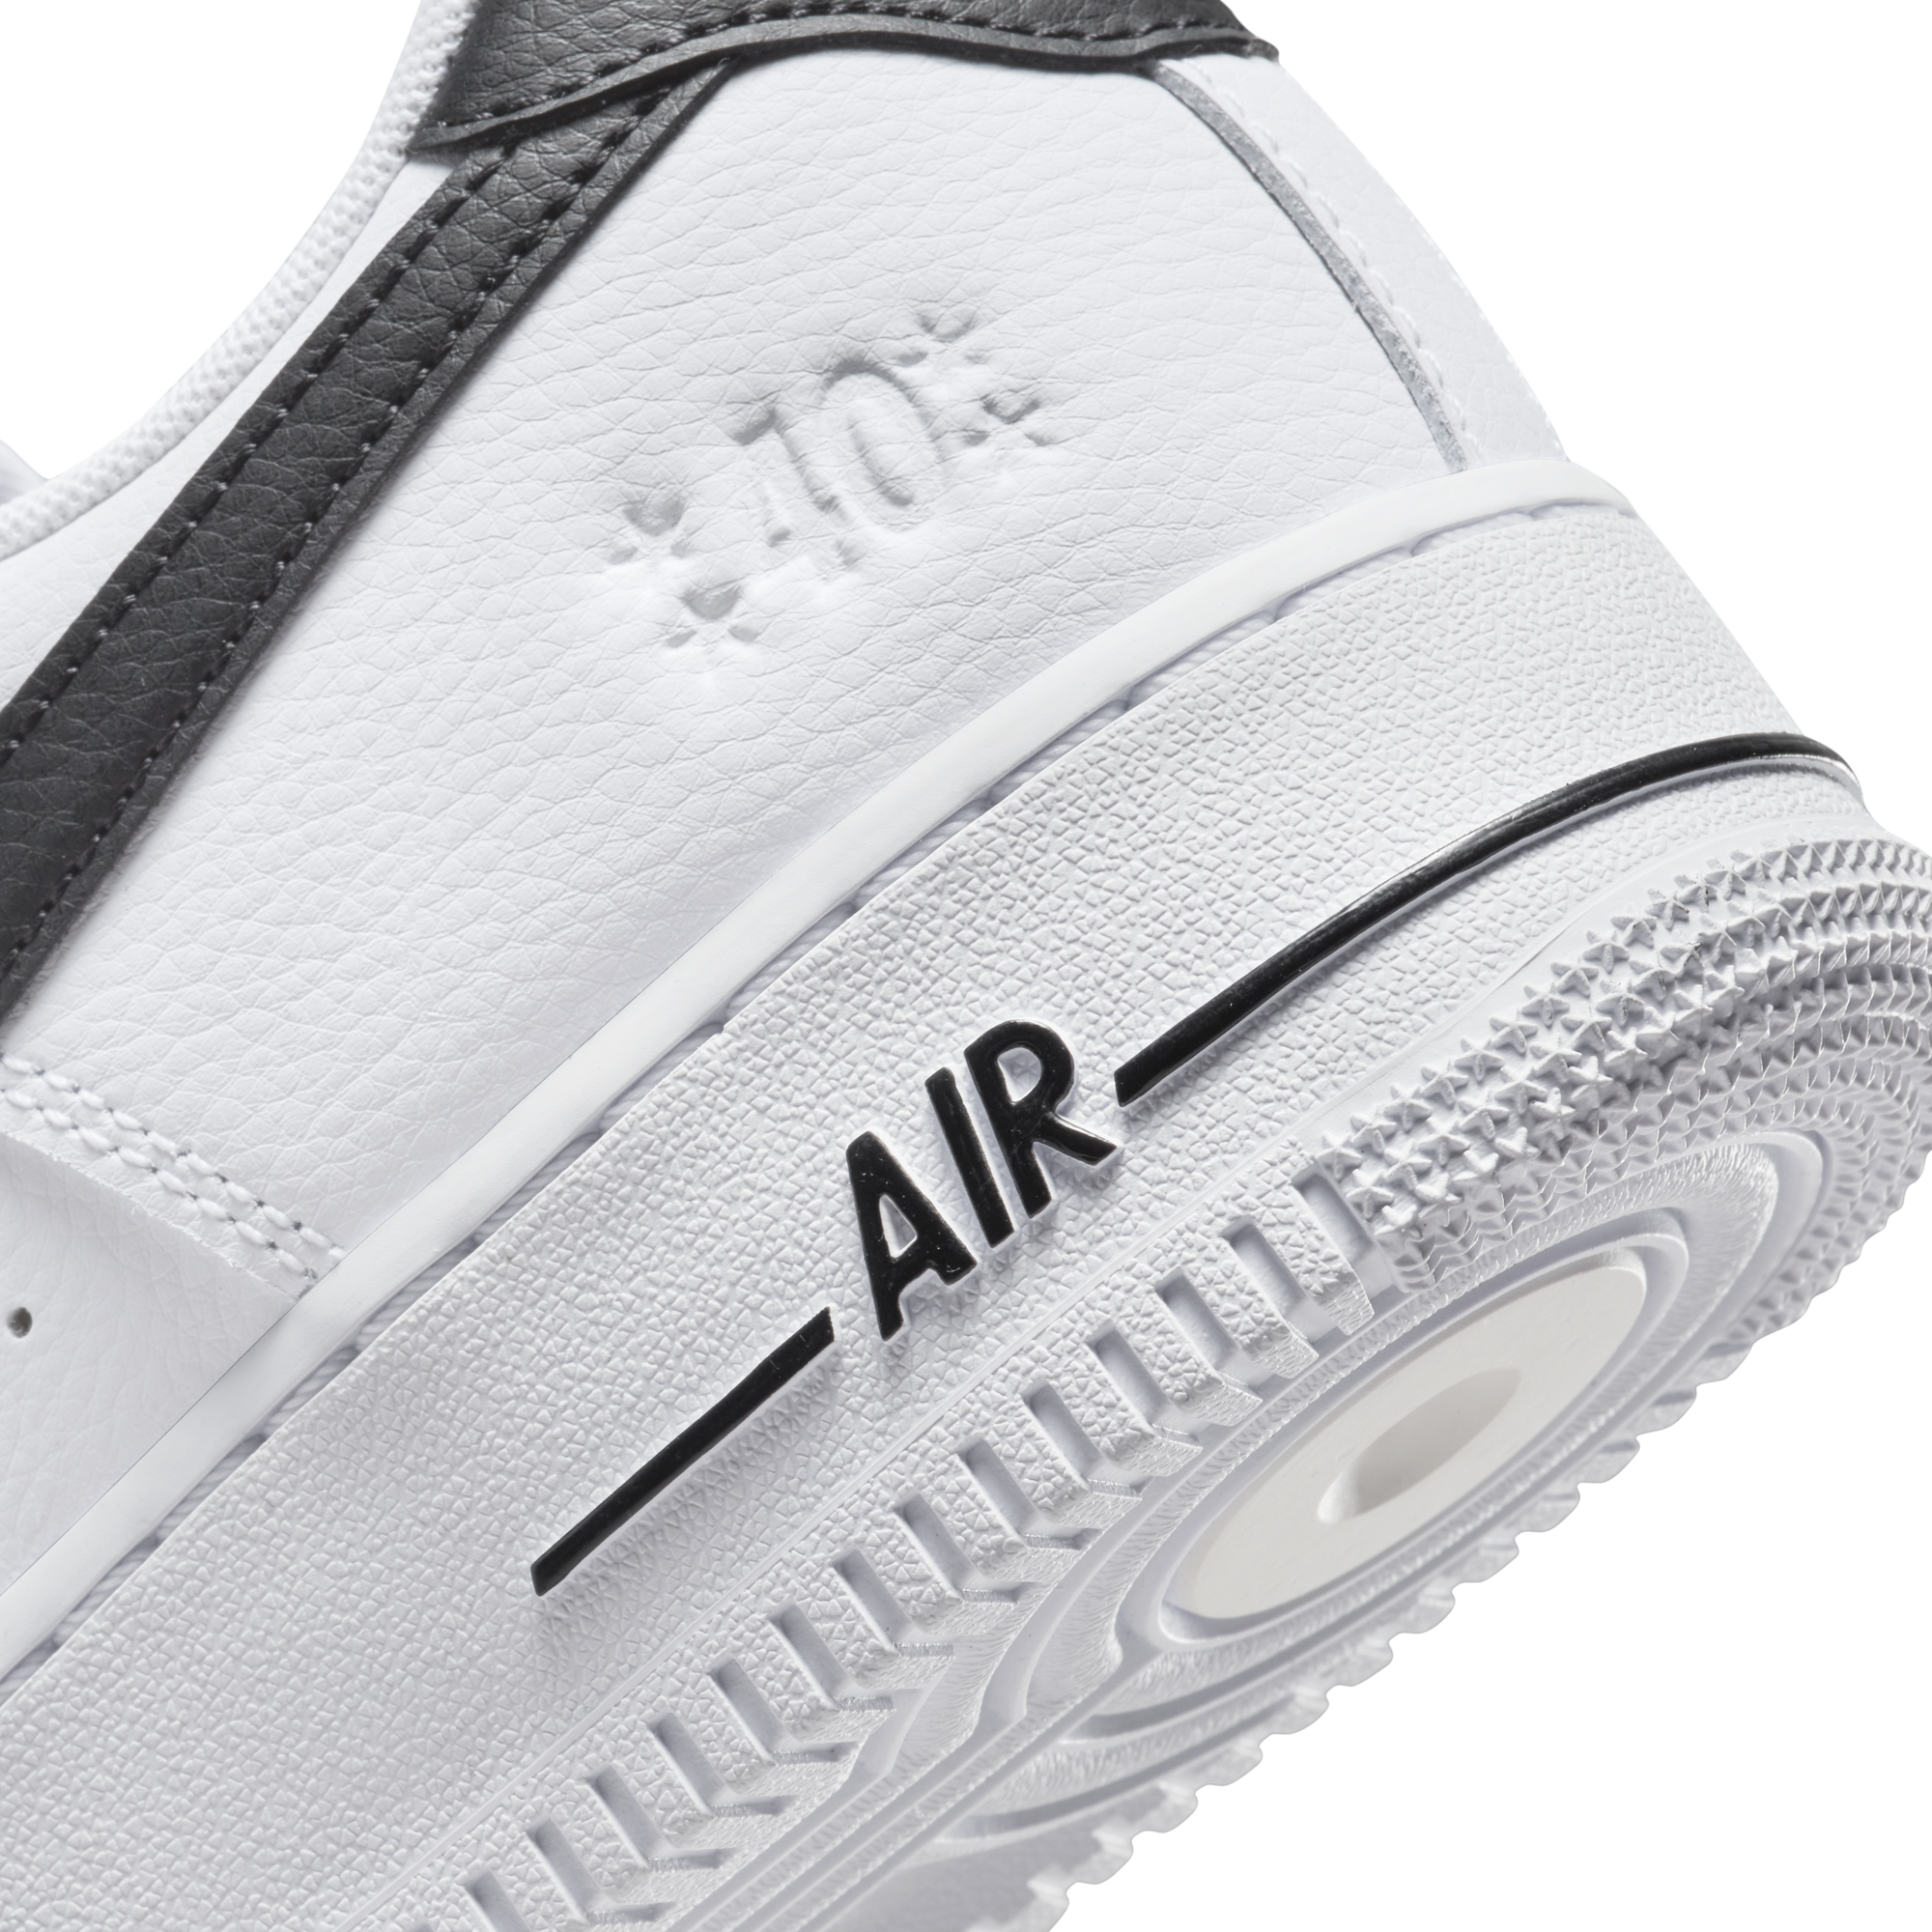 Nike Air Force 1 Low '07 LV8 40th Anniversary White Black